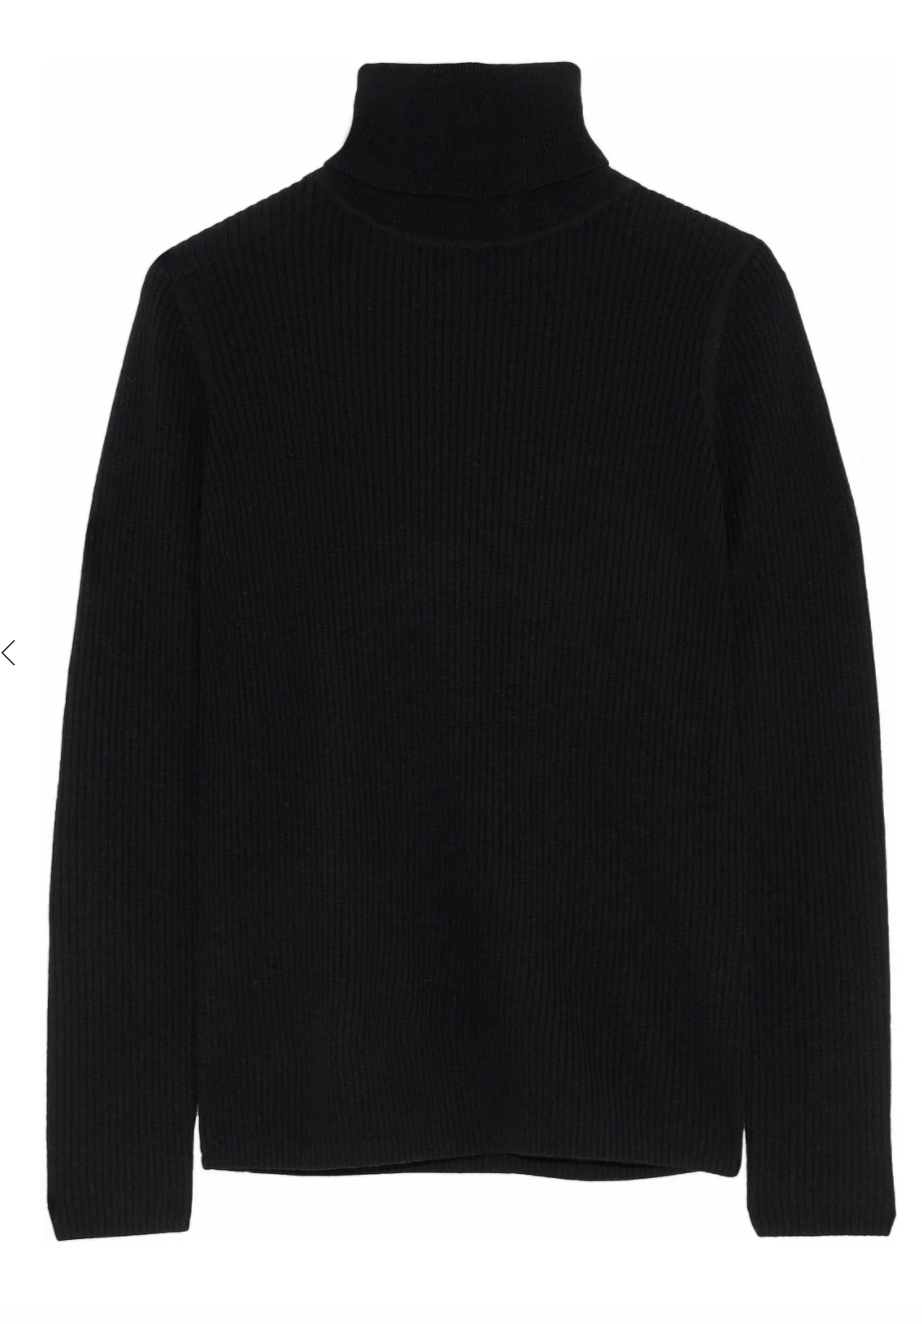 26) Ribbed wool turtleneck sweater